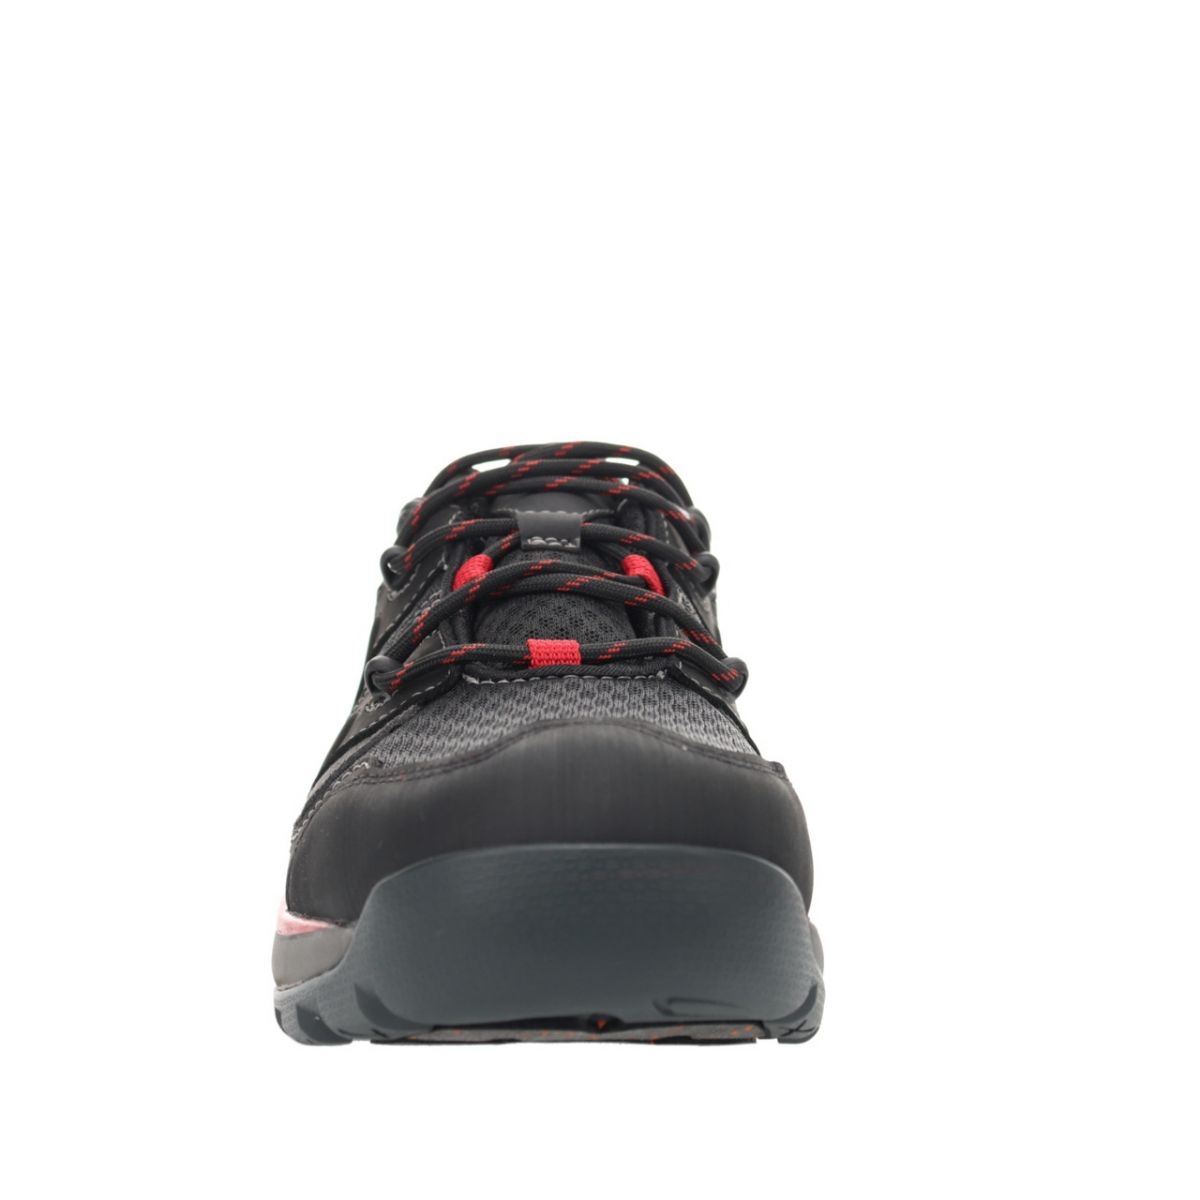 Propet Men's Vercors Hiking Shoe Black/Red - MOA002SBRD BLACK/RED - BLACK/RED, 12